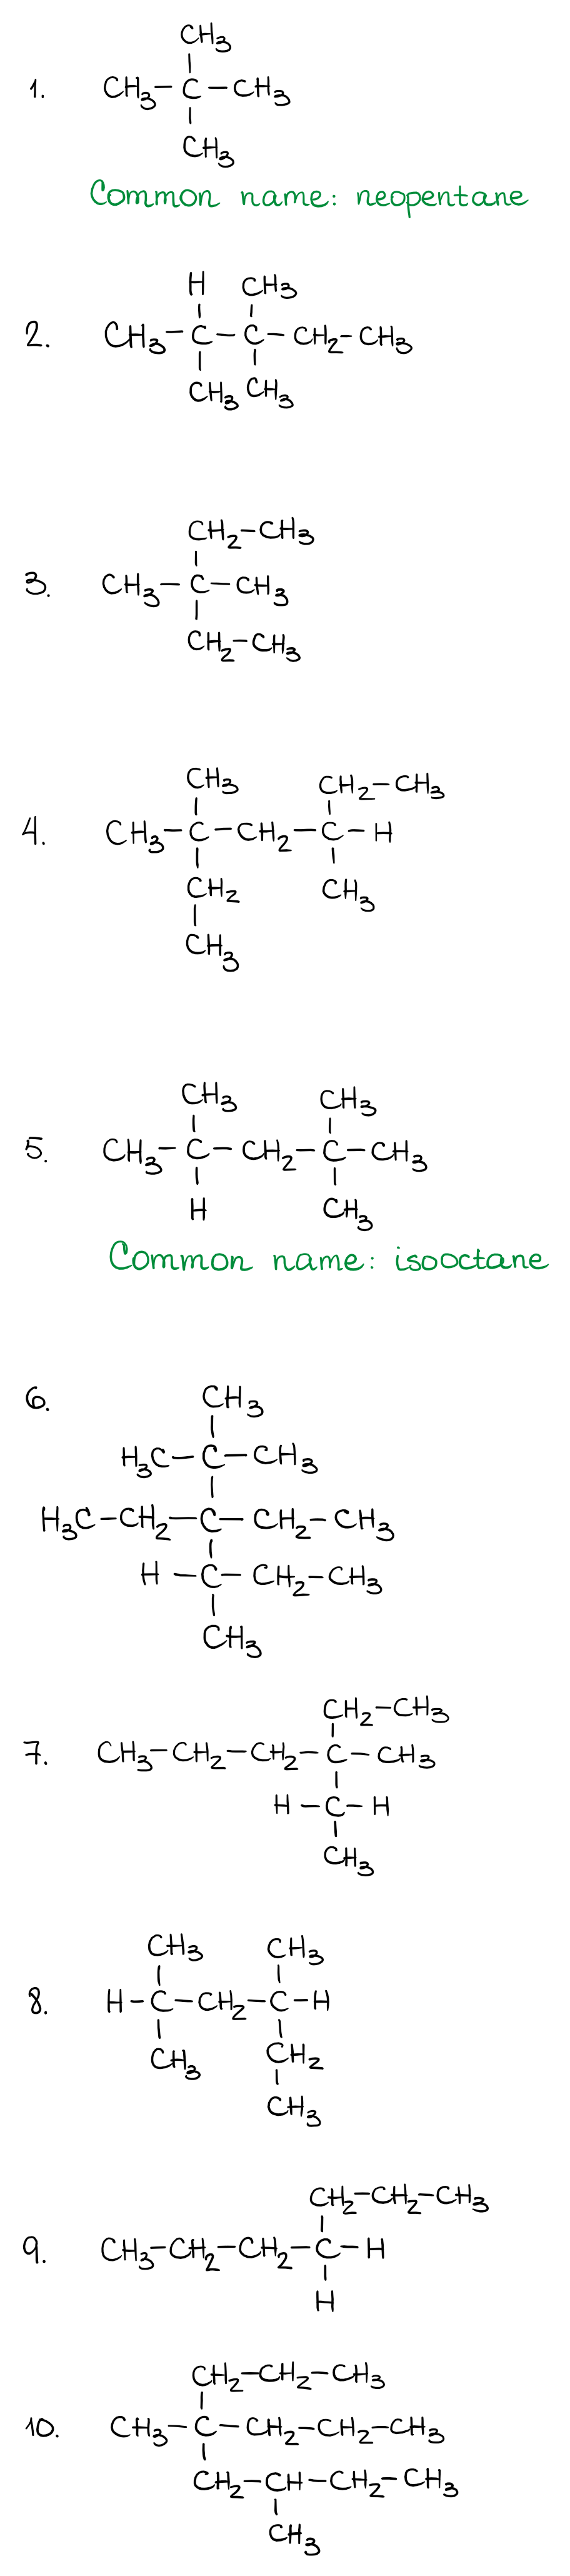 Nomenclature Of Alkanes Organic Chemistry Tutor